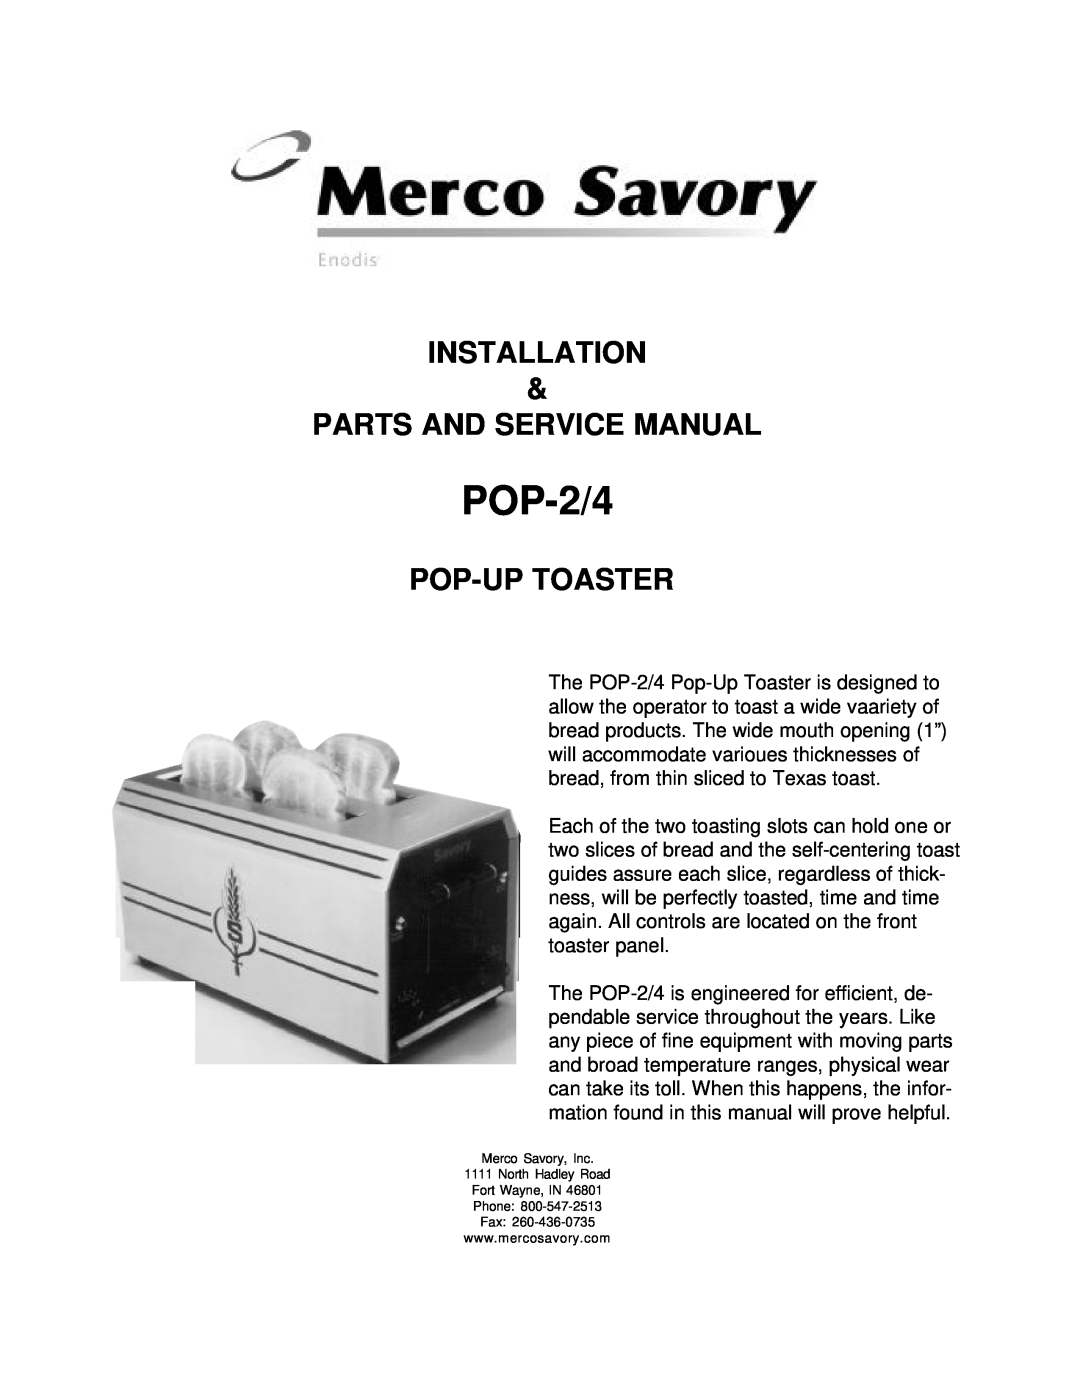 Merco Savory POP-2/4 service manual Pop-Uptoaster 